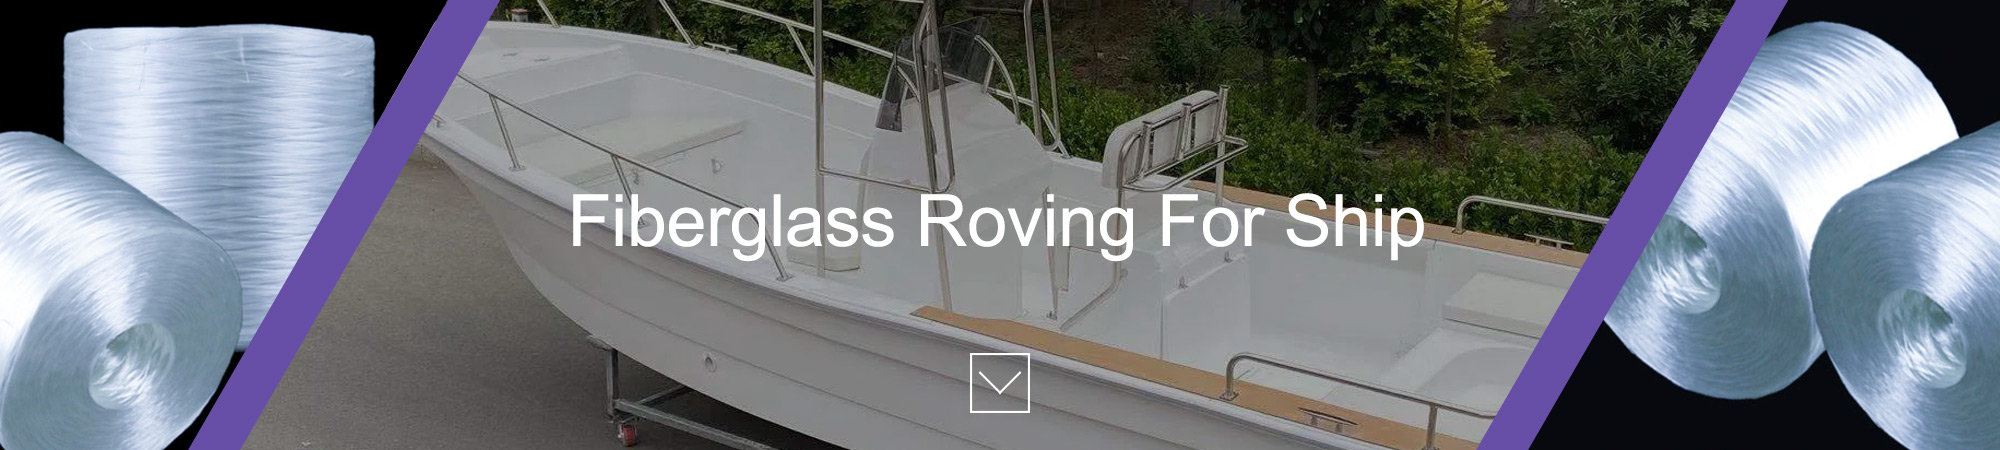 fiberglass roving for shipbuilding-HD Fiberglass